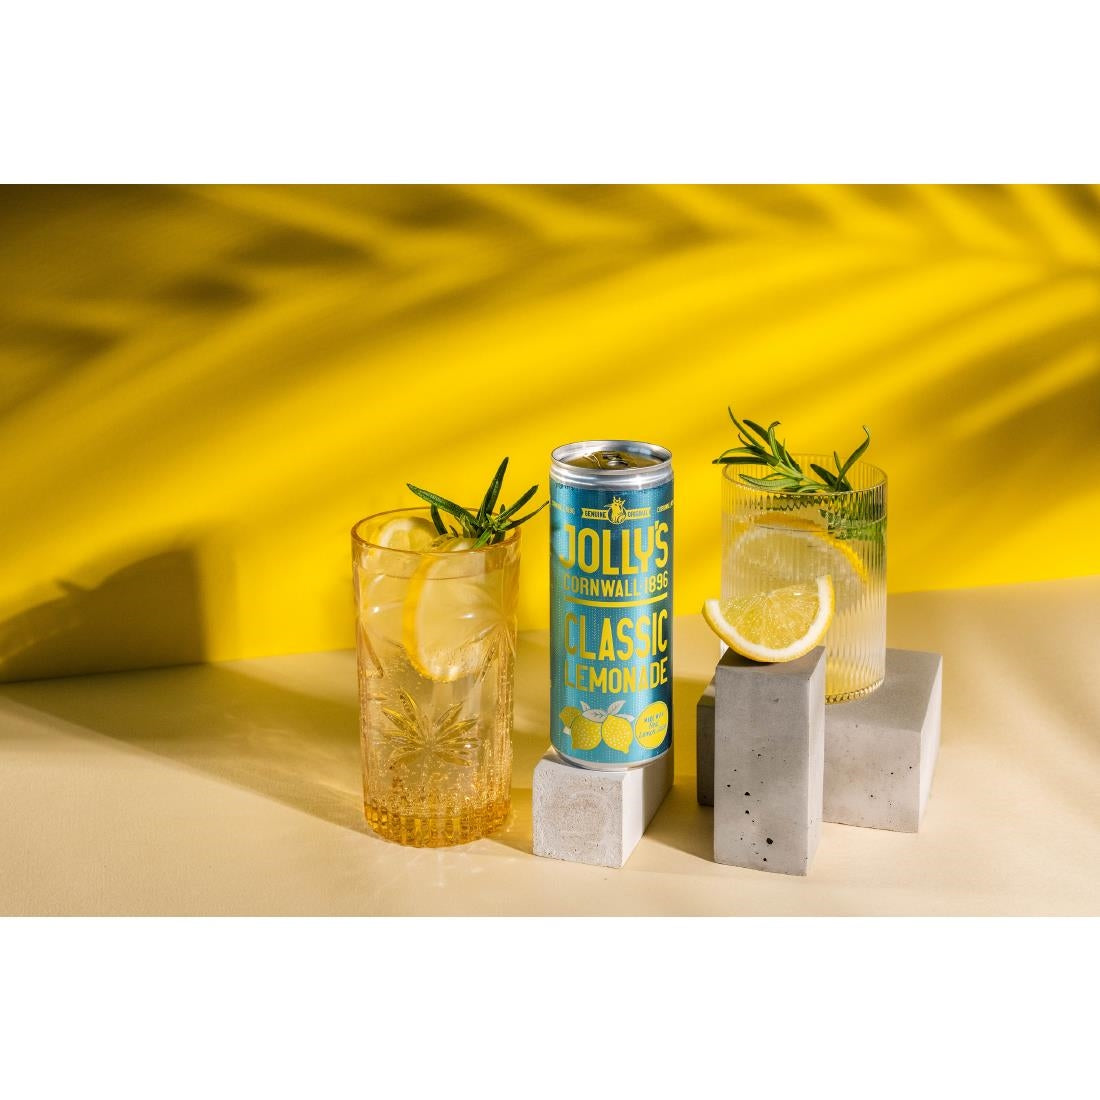 HN940 Jolly's Cornish Classic Lemonade Cans 250ml (Pack of 24)